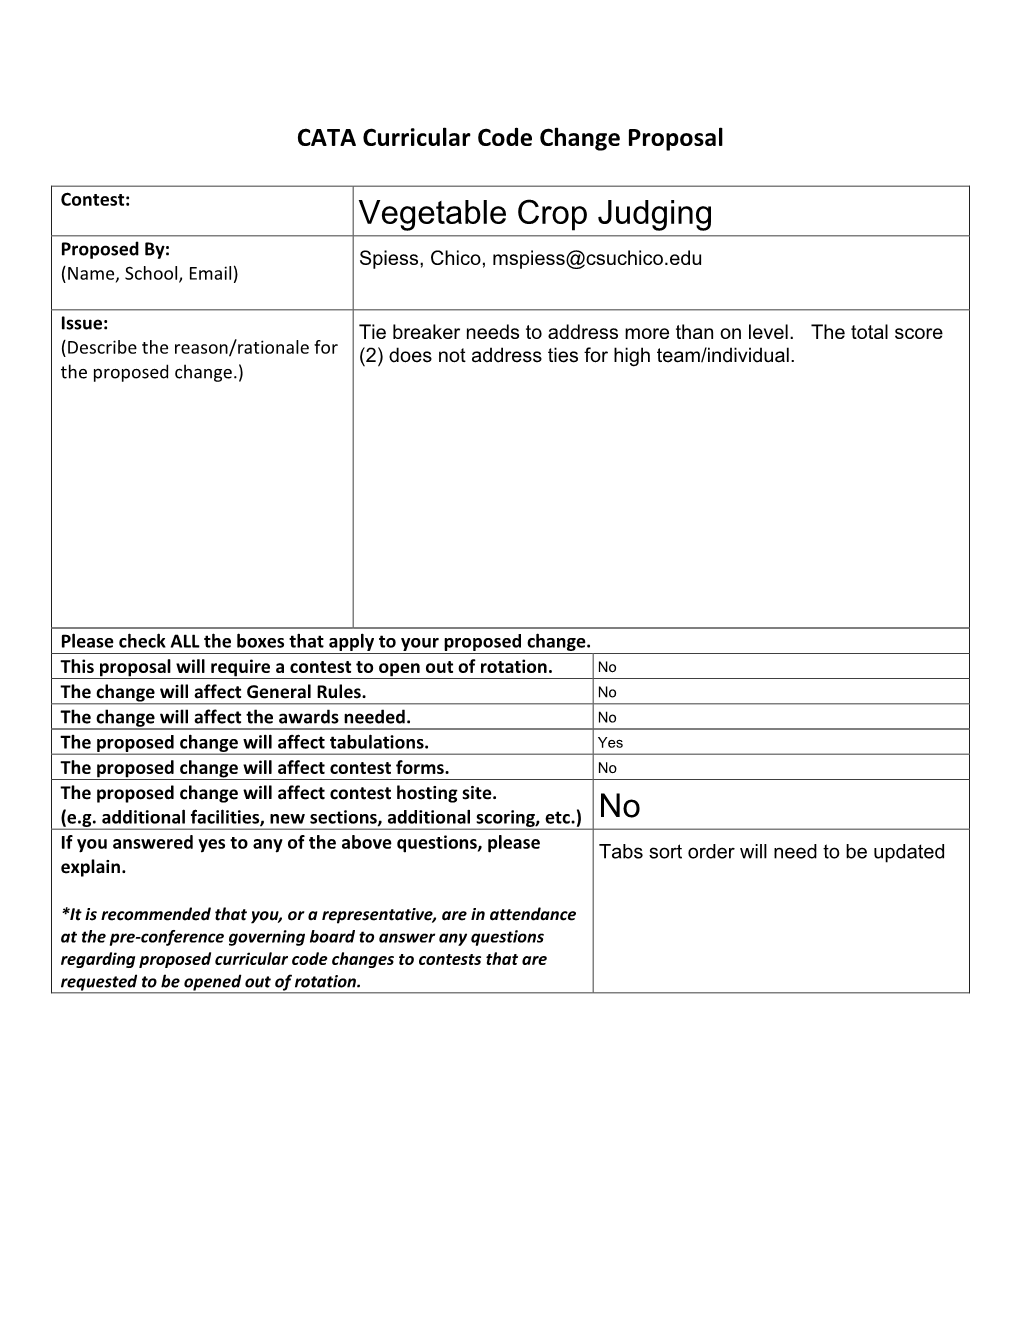 Vegetable Crop Judging No